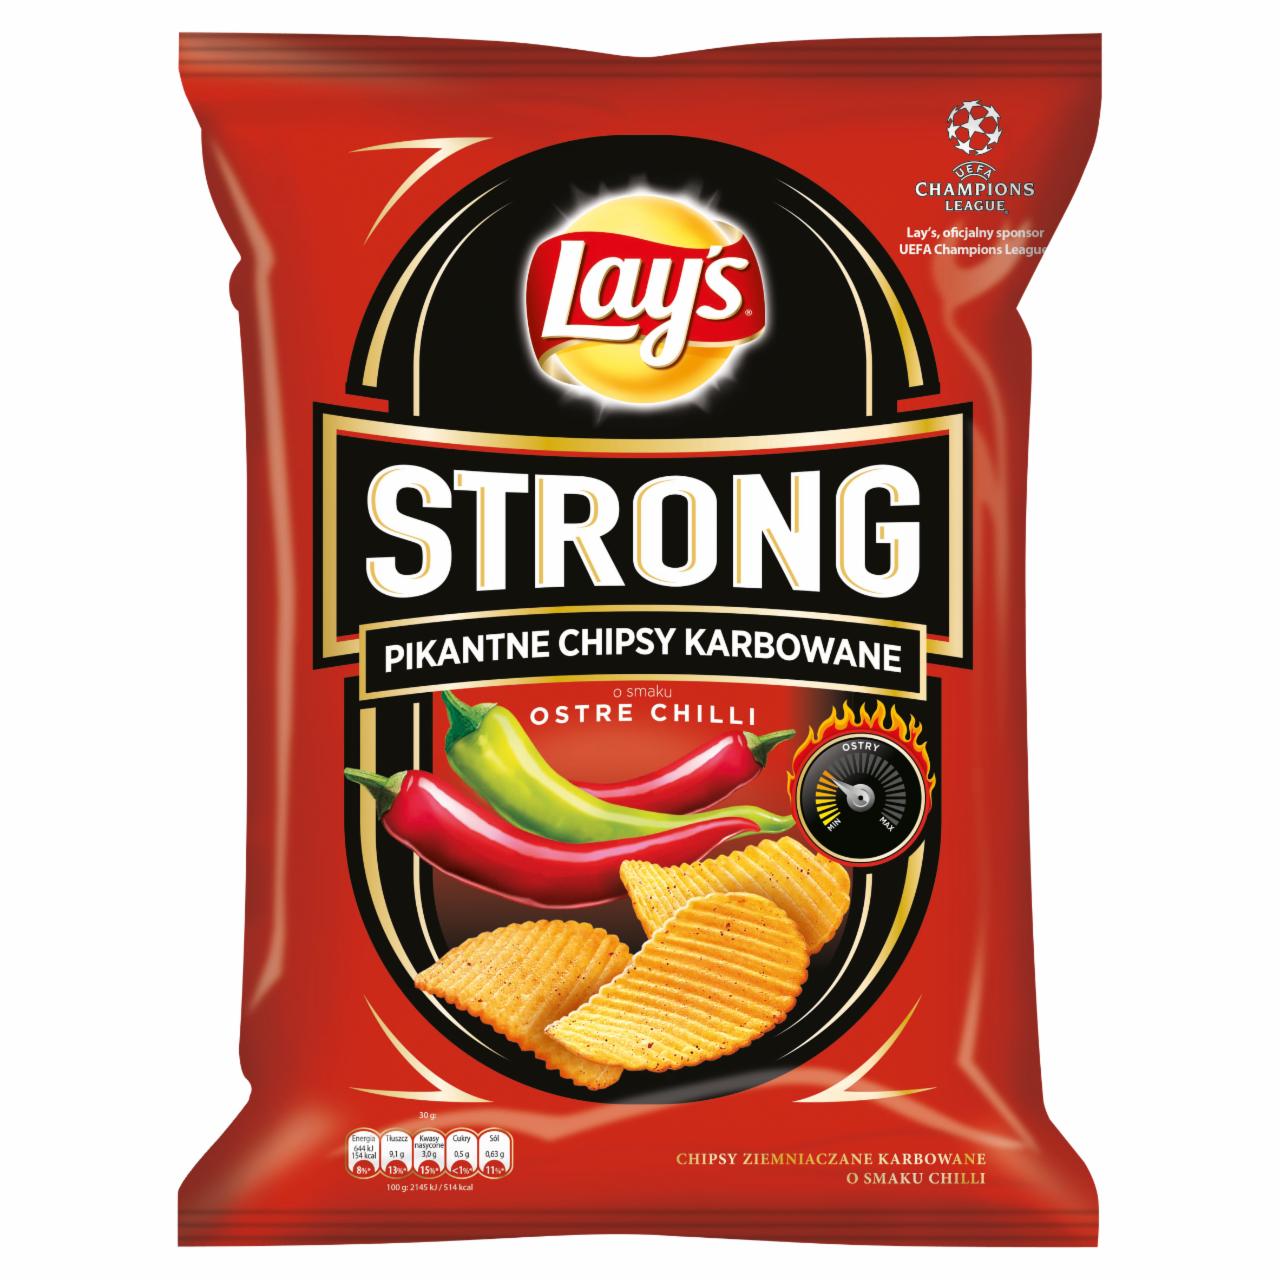 Zdjęcia - Lay's Strong Pikantne chipsy karbowane o smaku ostre chilli 80 g